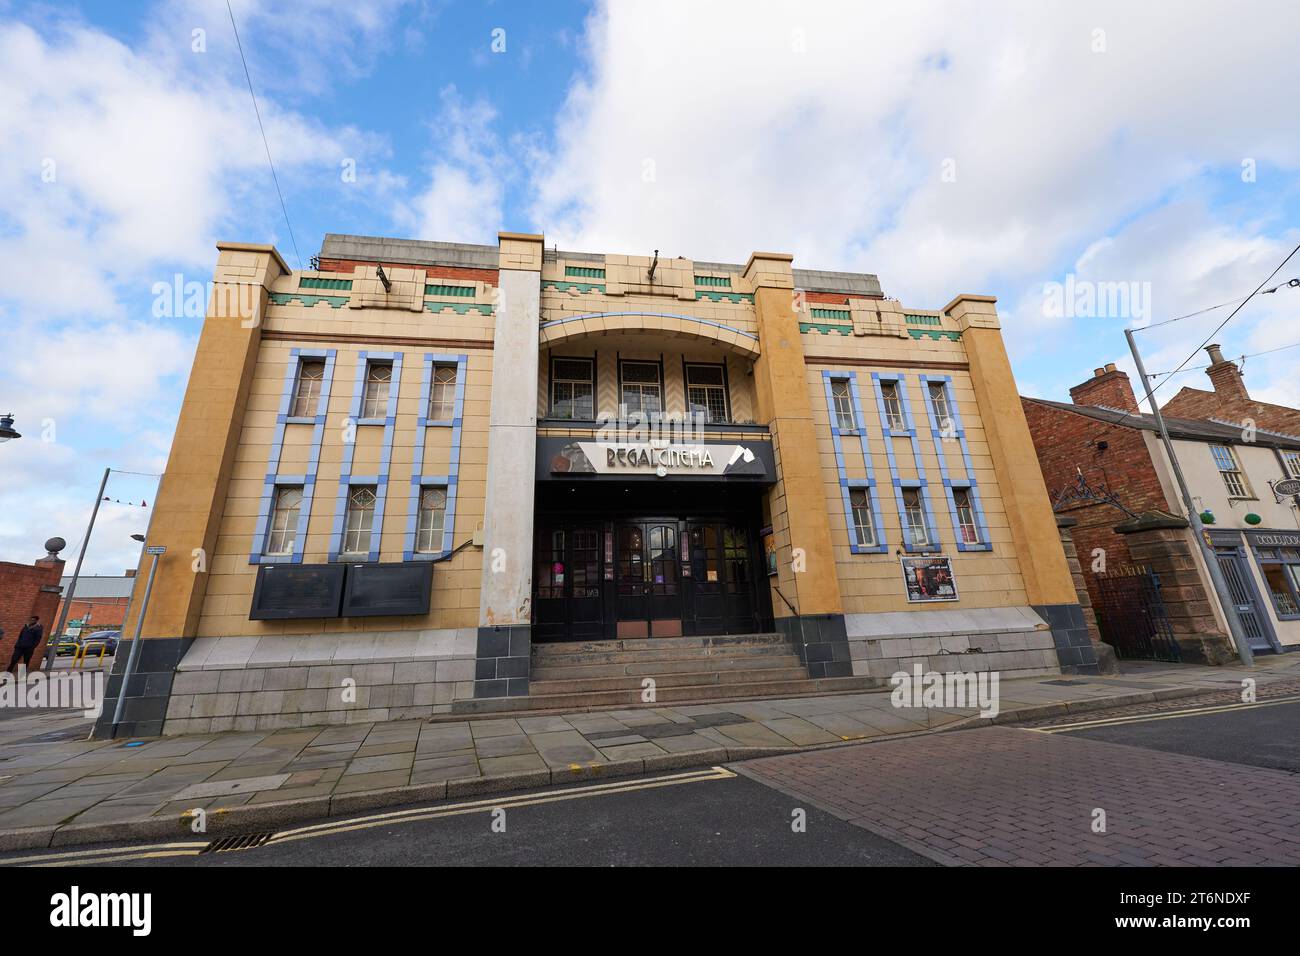 Art Deco style cinema building in Melton Mowbray, Leicestershire, UK Stock Photo